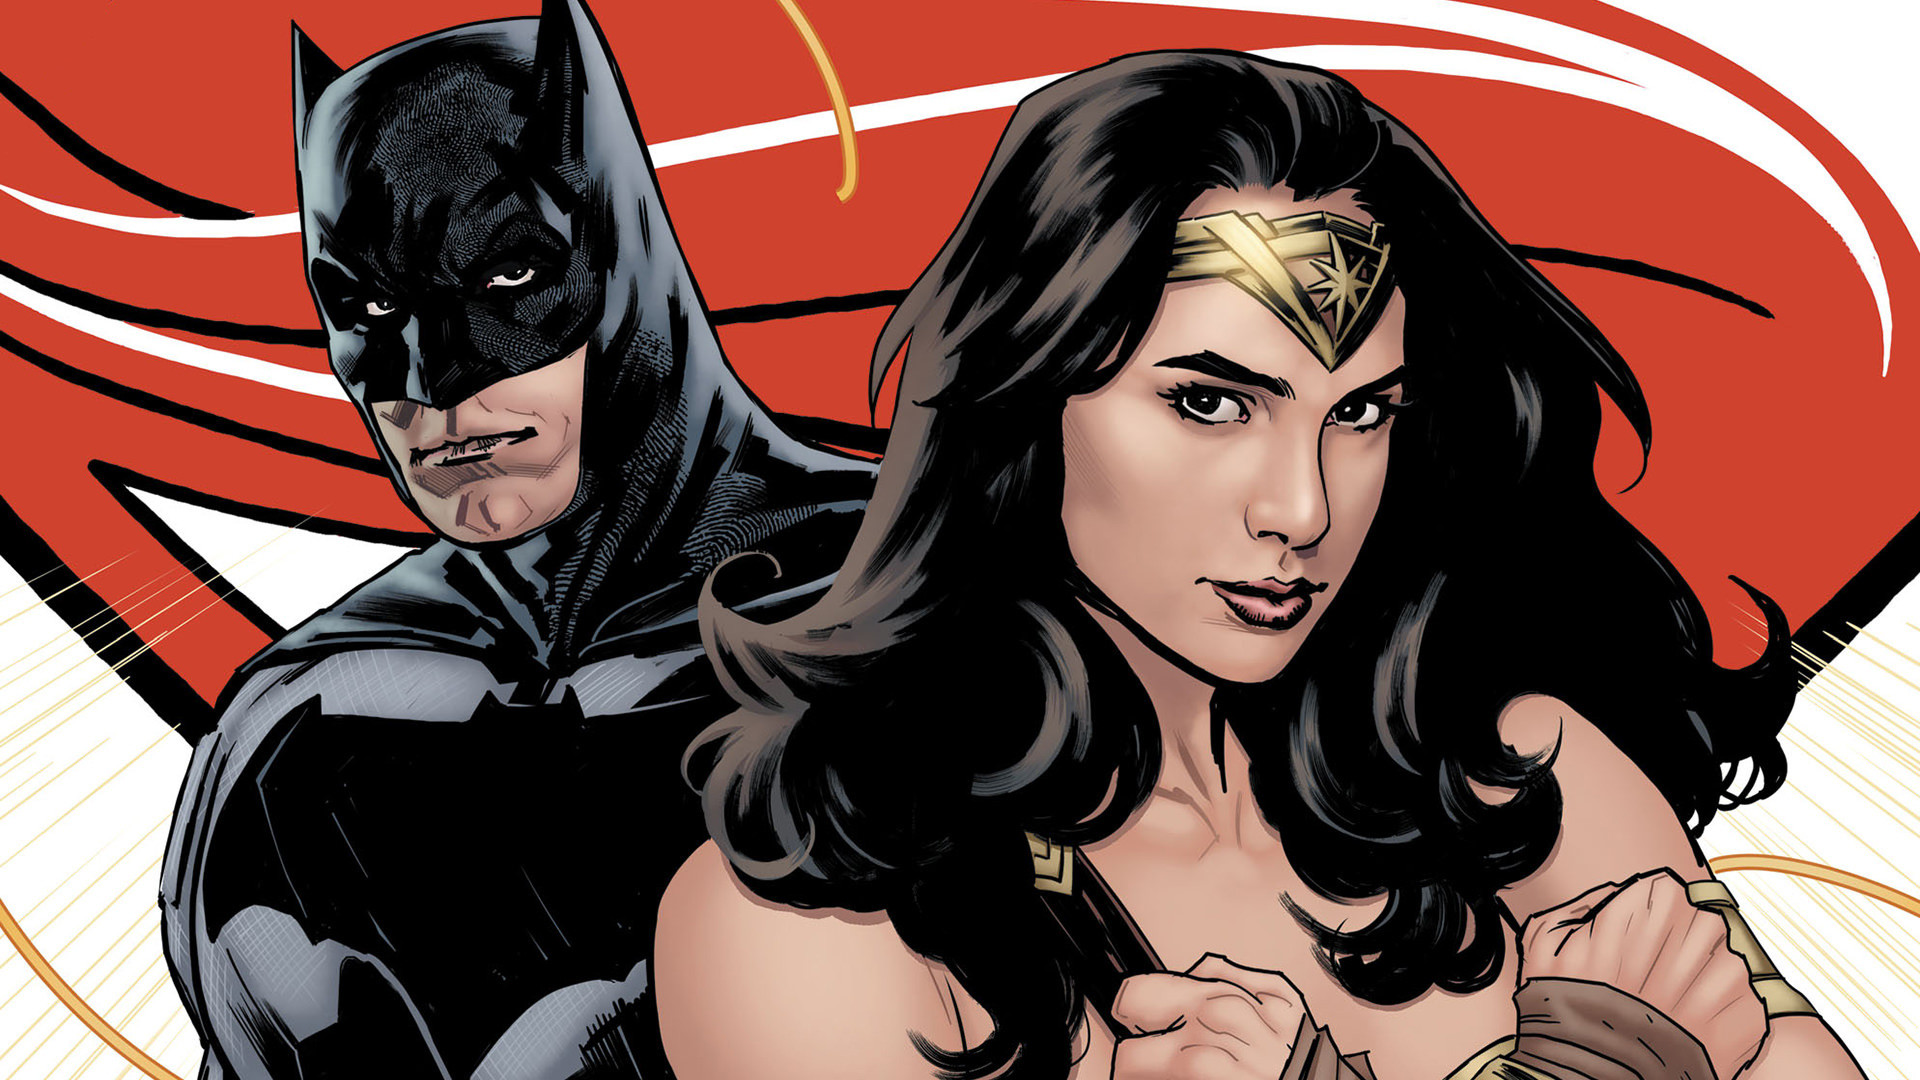 Desktop Wallpaper Batman Wonder Woman Justice League Fan Art Hd Image Picture Background